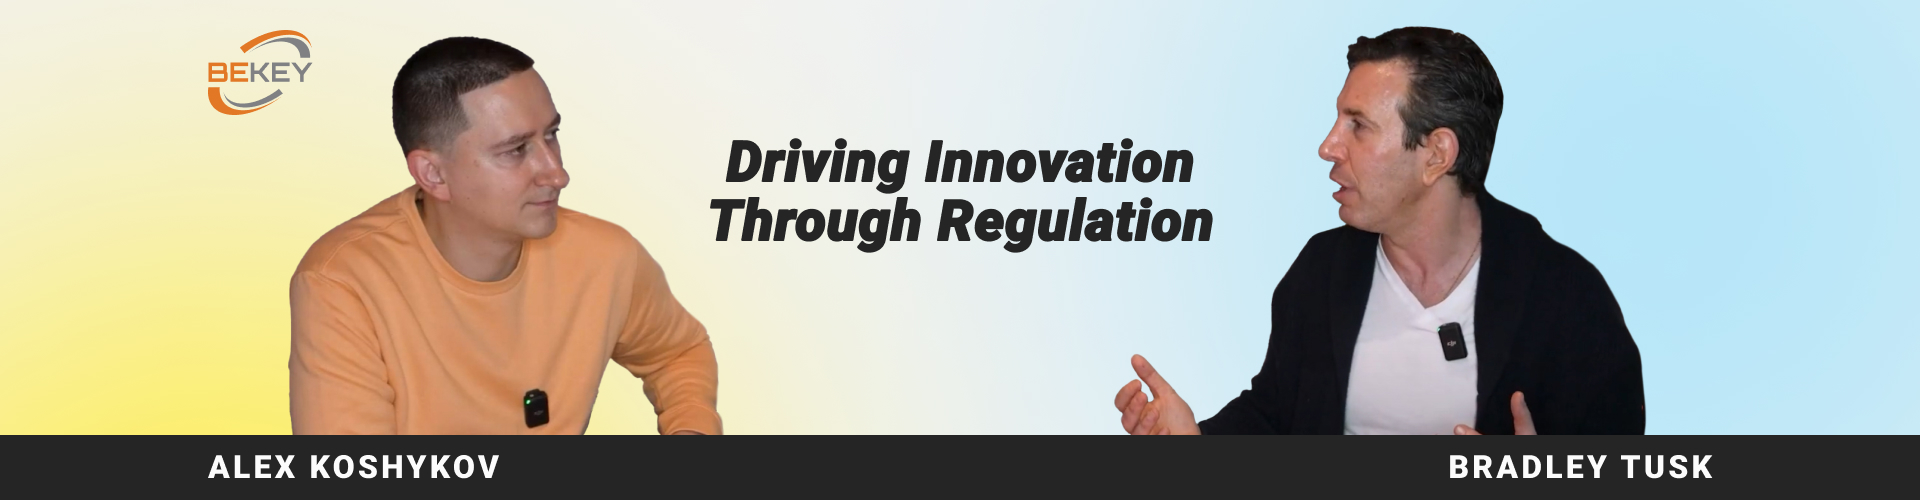 Driving Innovation Through Regulation. Digital Health Interviews: Bradley Tusk - image